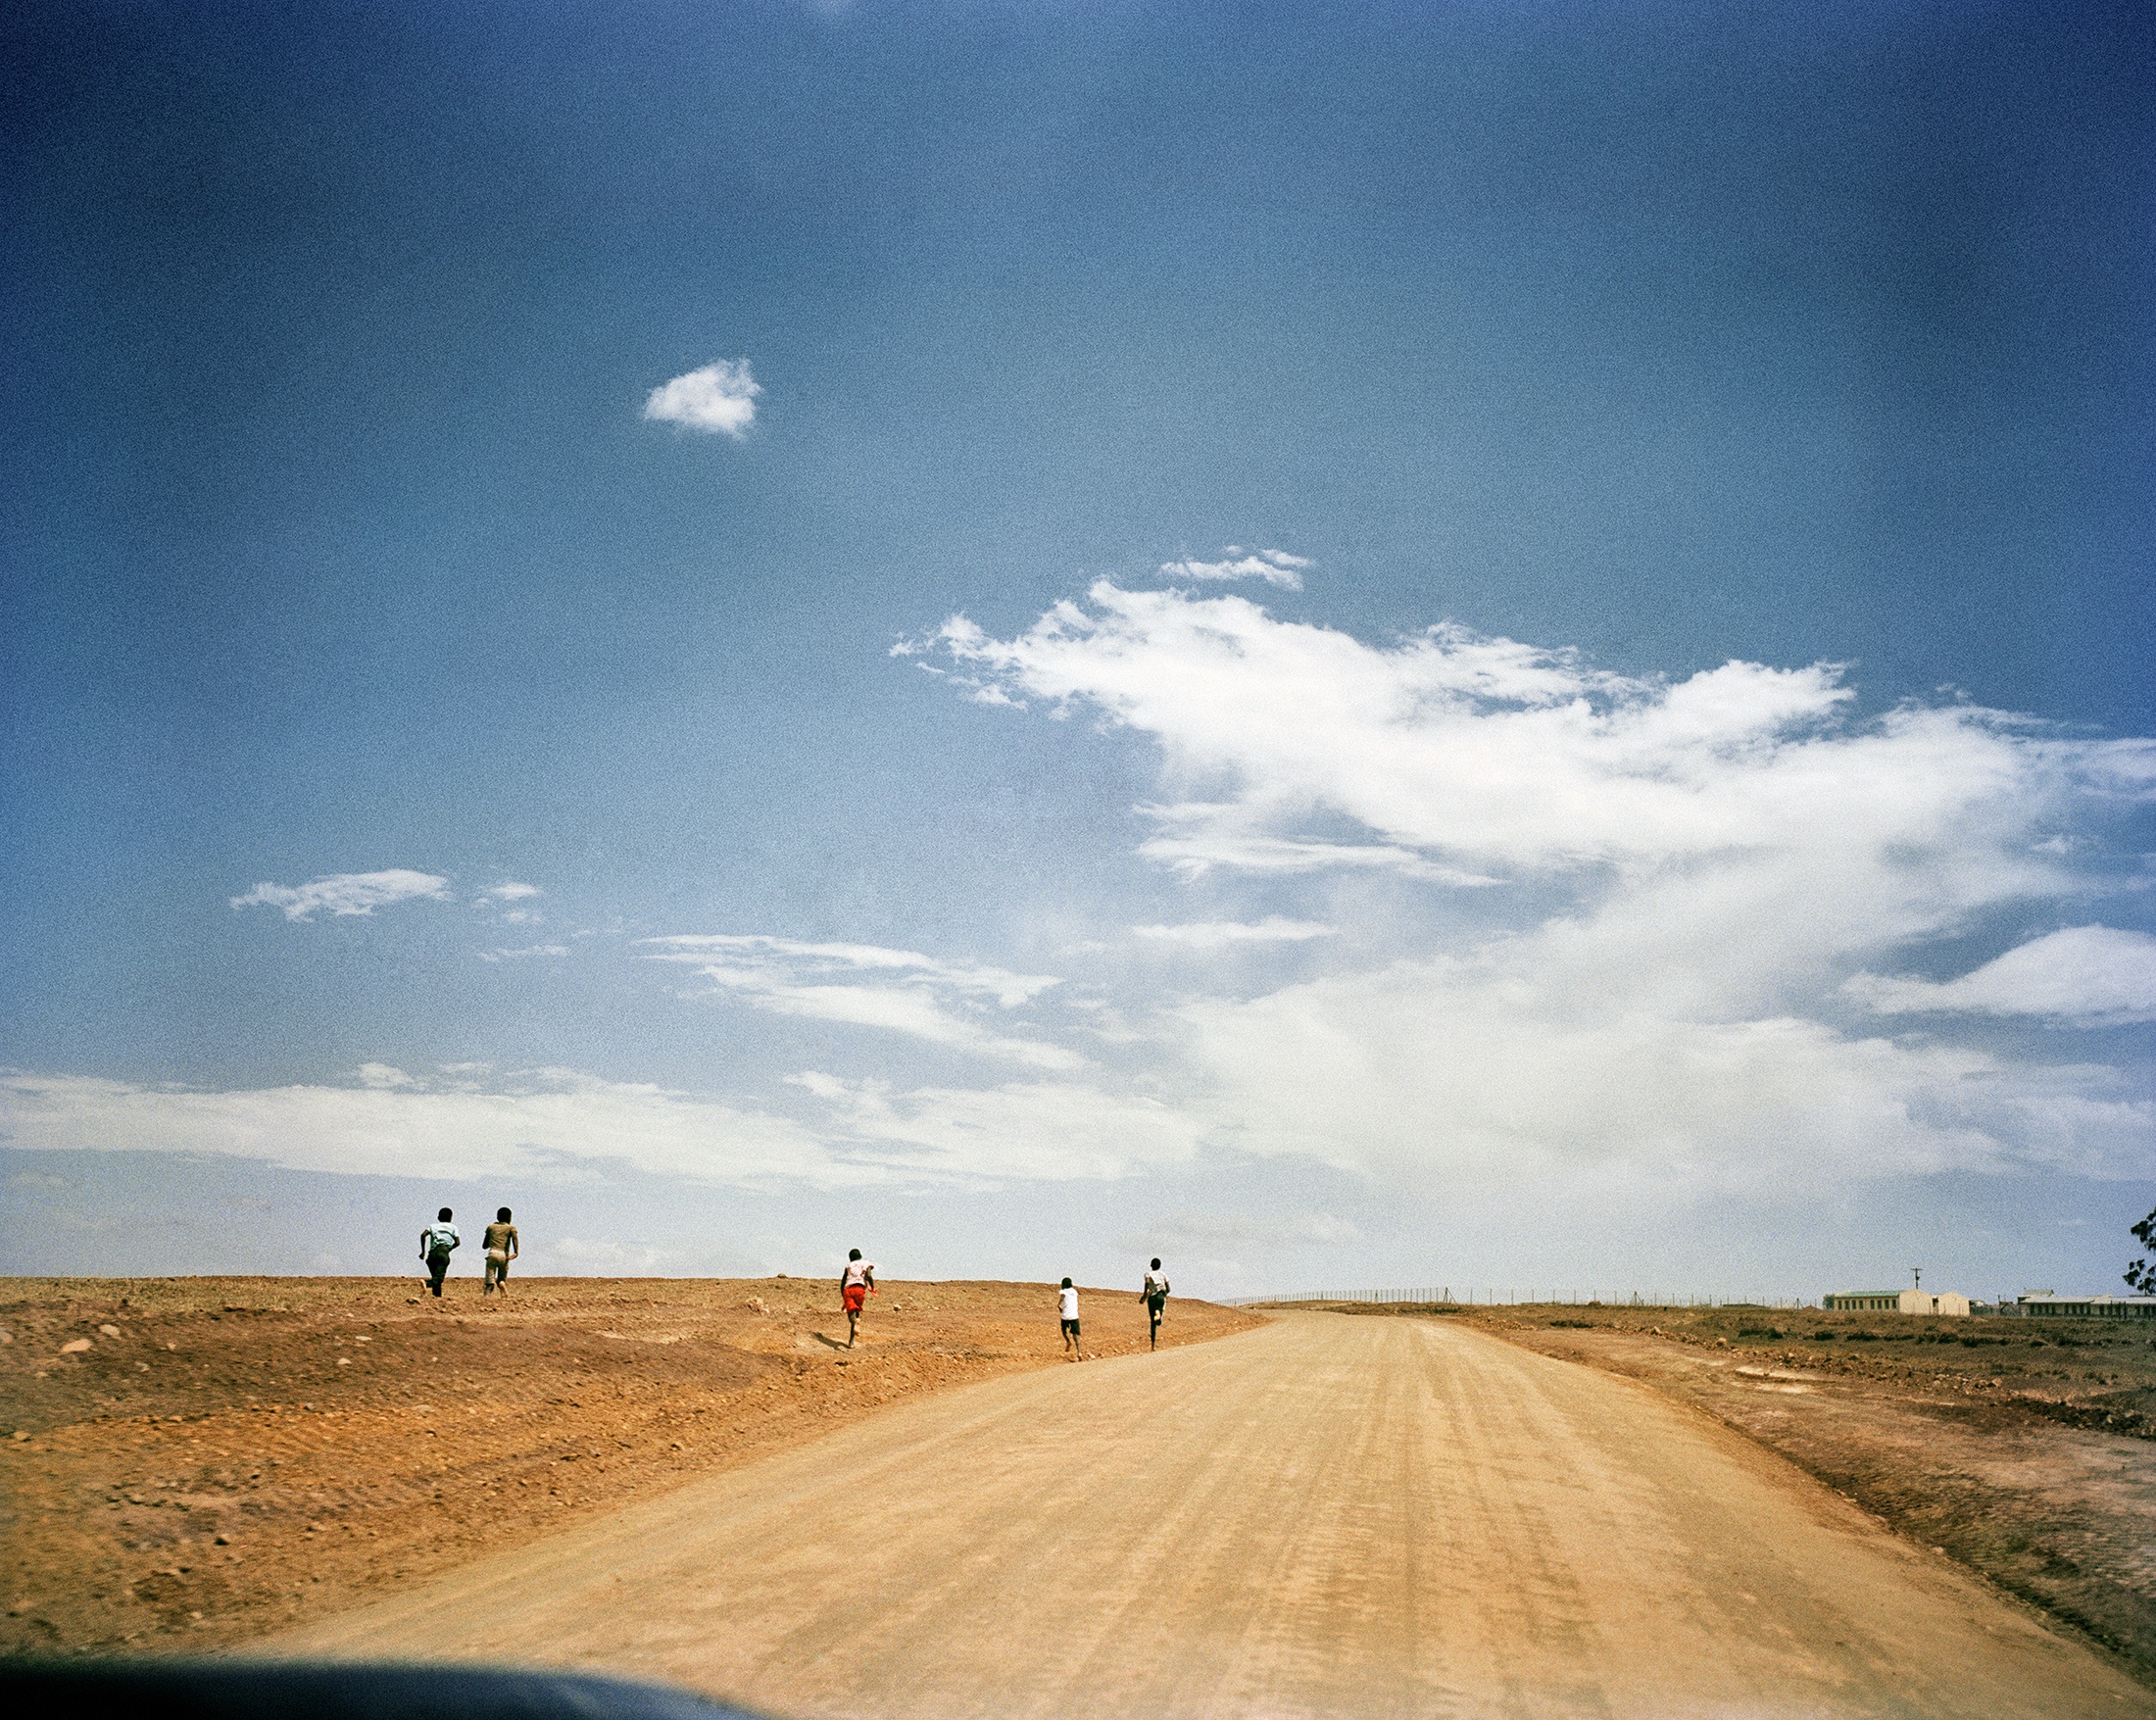 Lindokuhle Sobekwa's photograph 'Tsojana bus stop' shows children running next to a tarred road.
